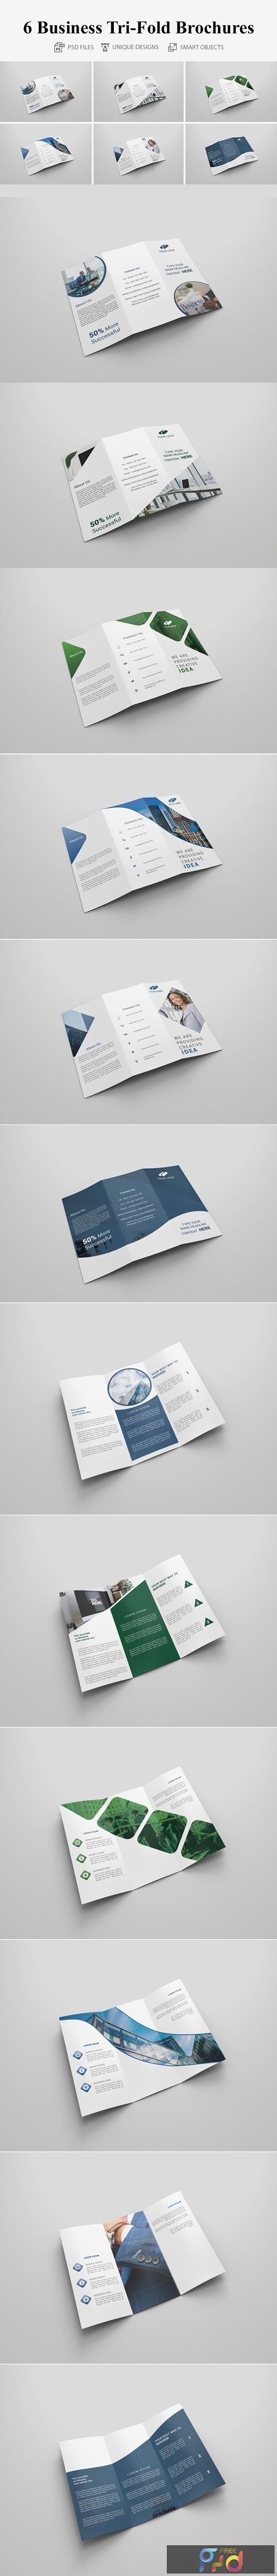 6 Business Tri-fold Brochures 4160617 1